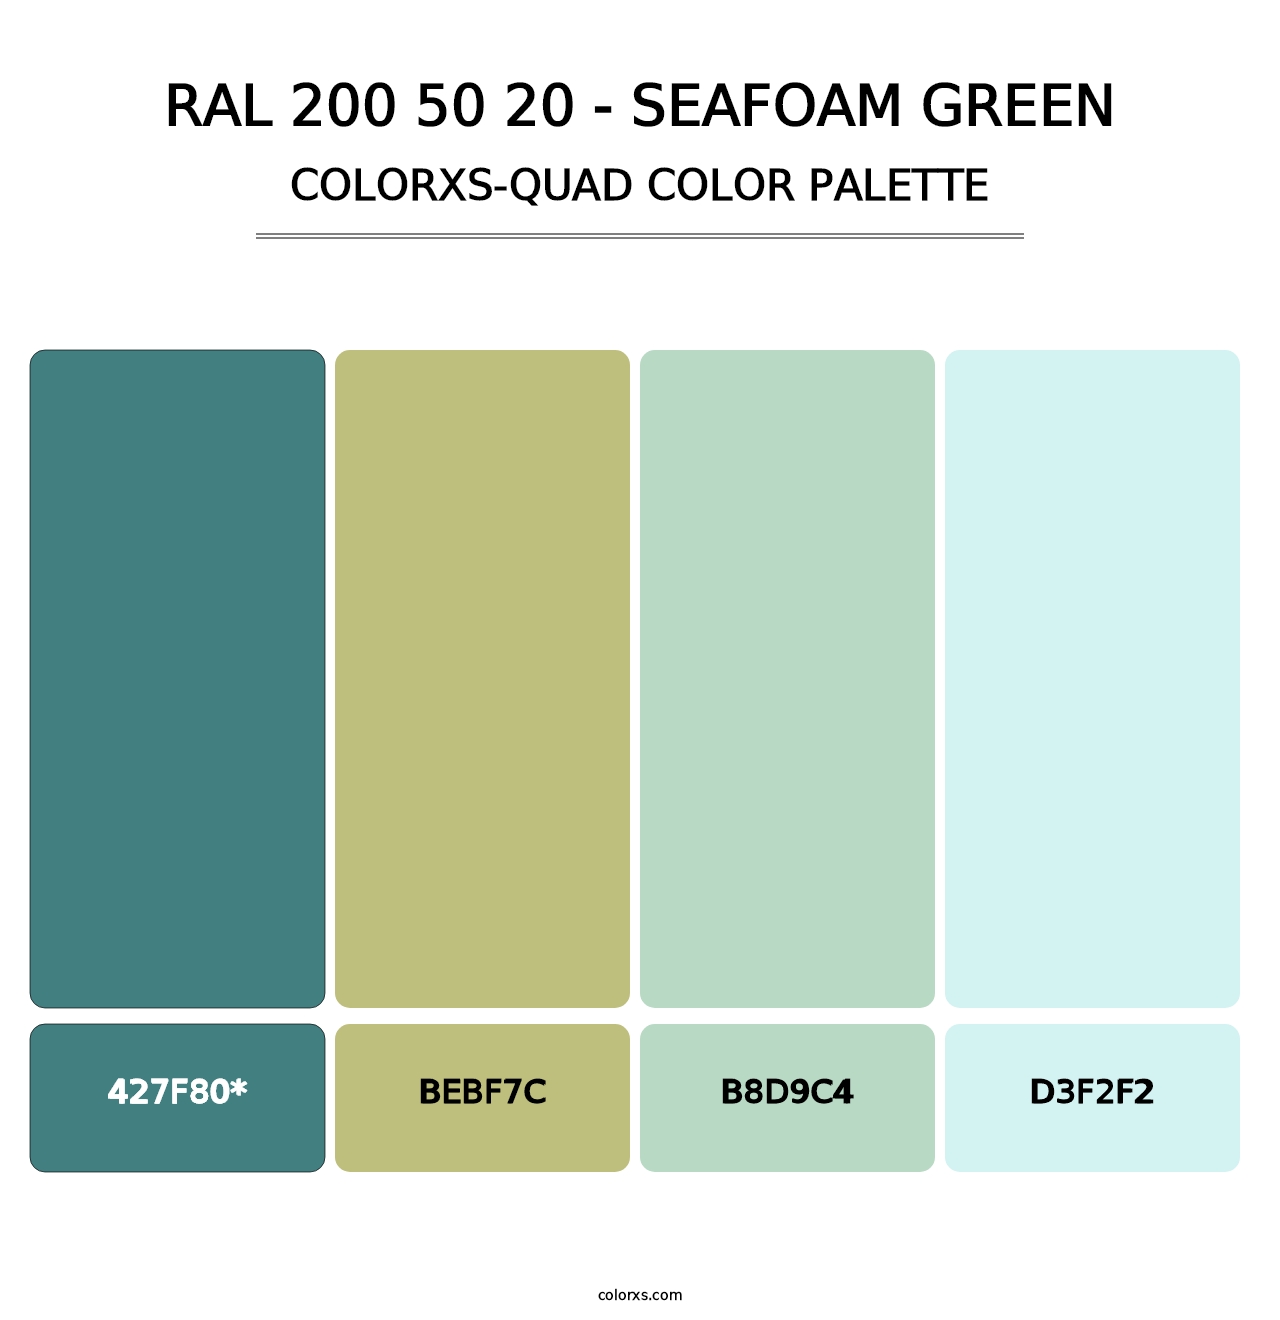 RAL 200 50 20 - Seafoam Green - Colorxs Quad Palette